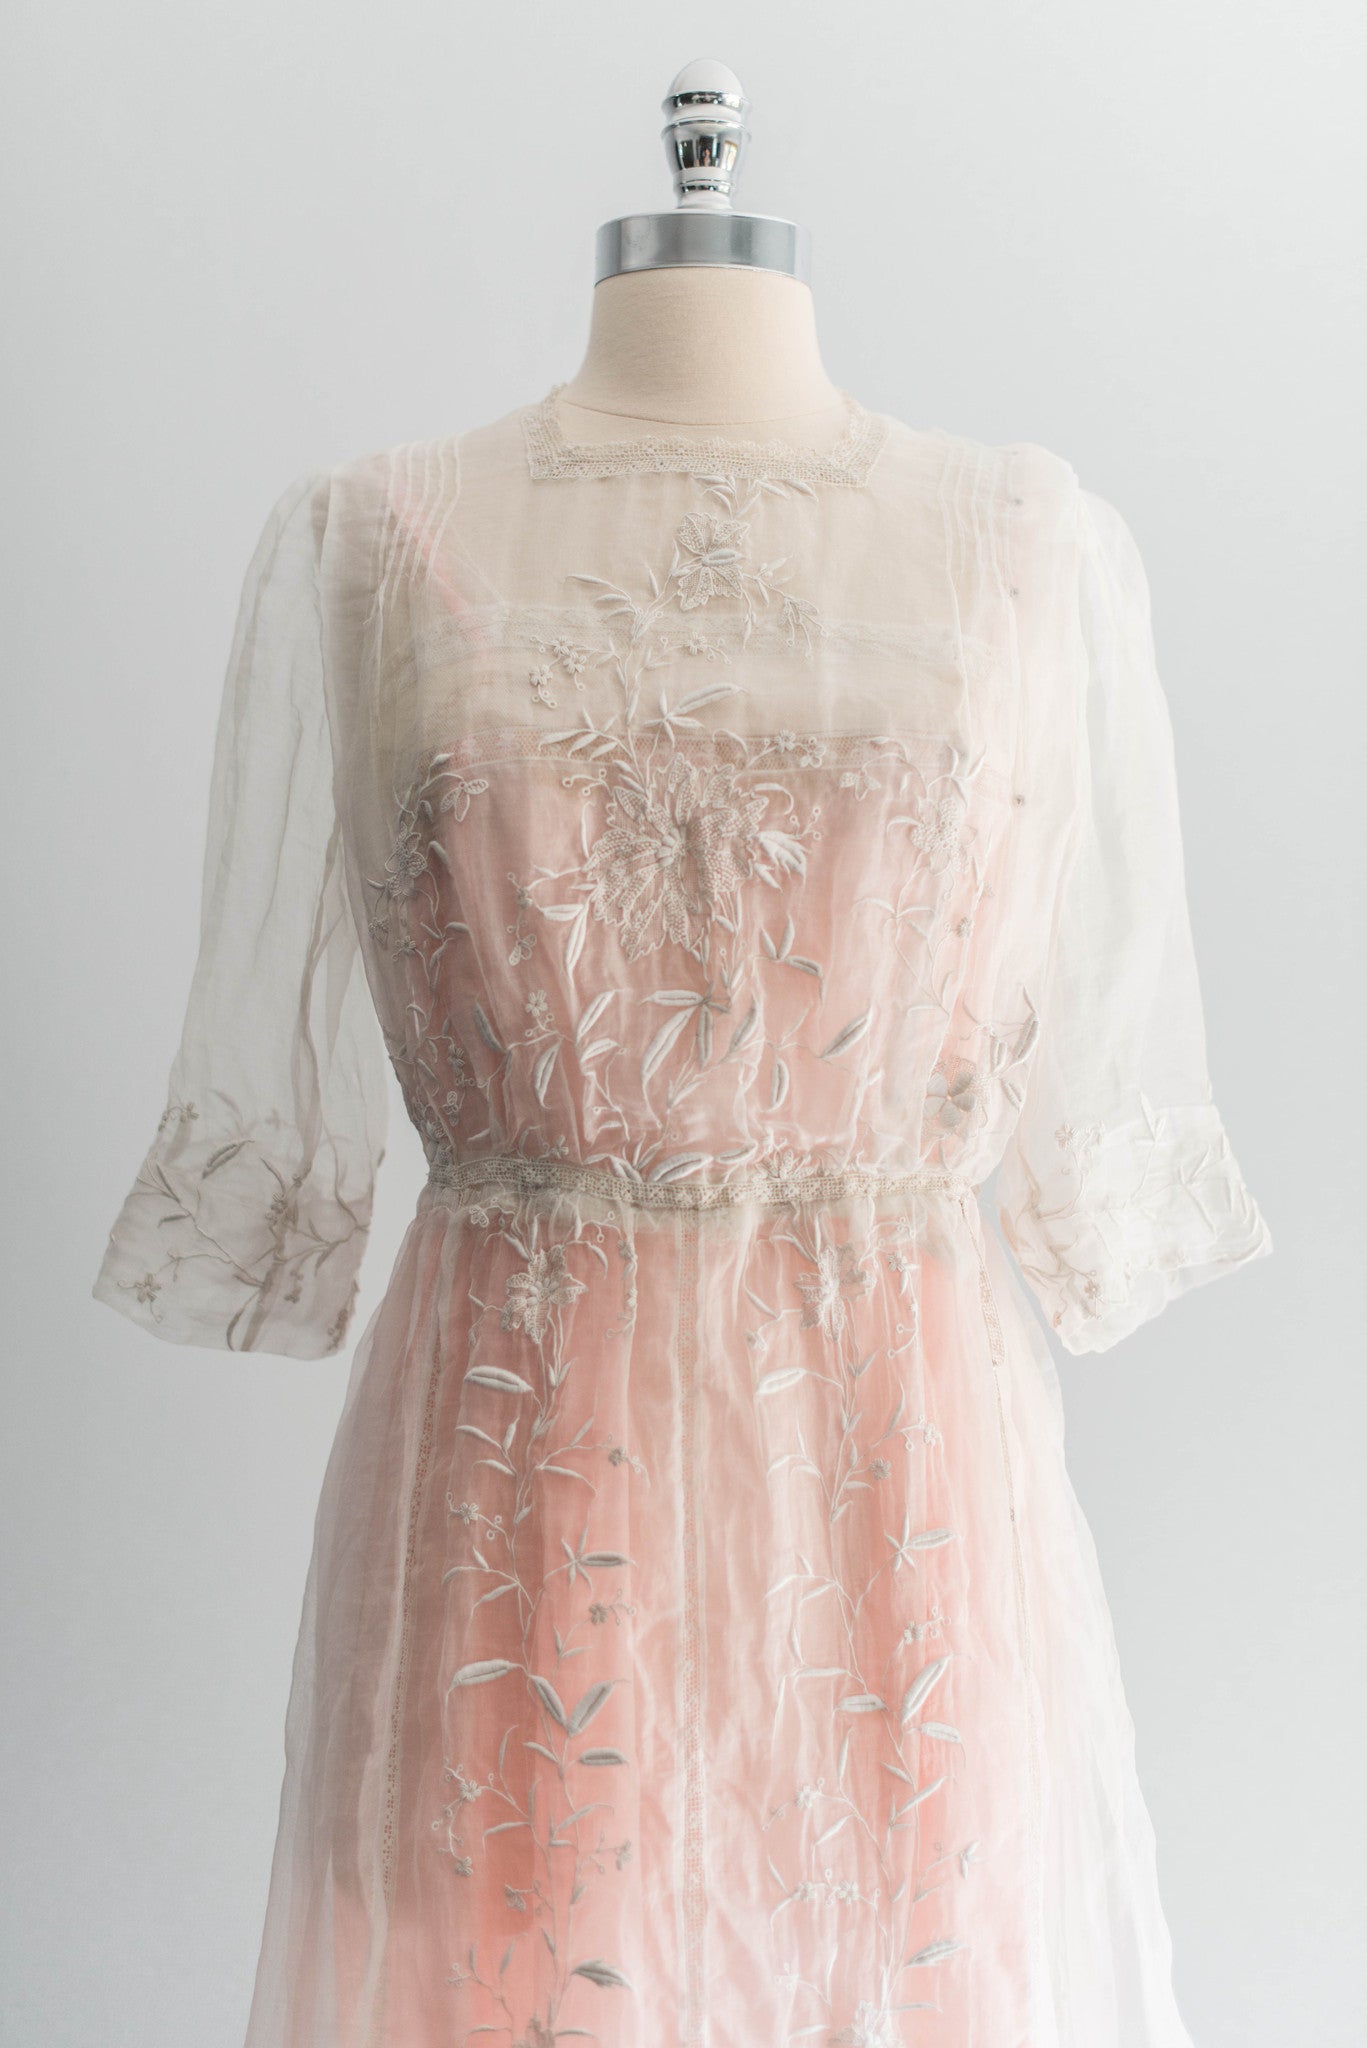 [SOLD] Silk Organza Embroidered Tea Dress | G O S S A M E R